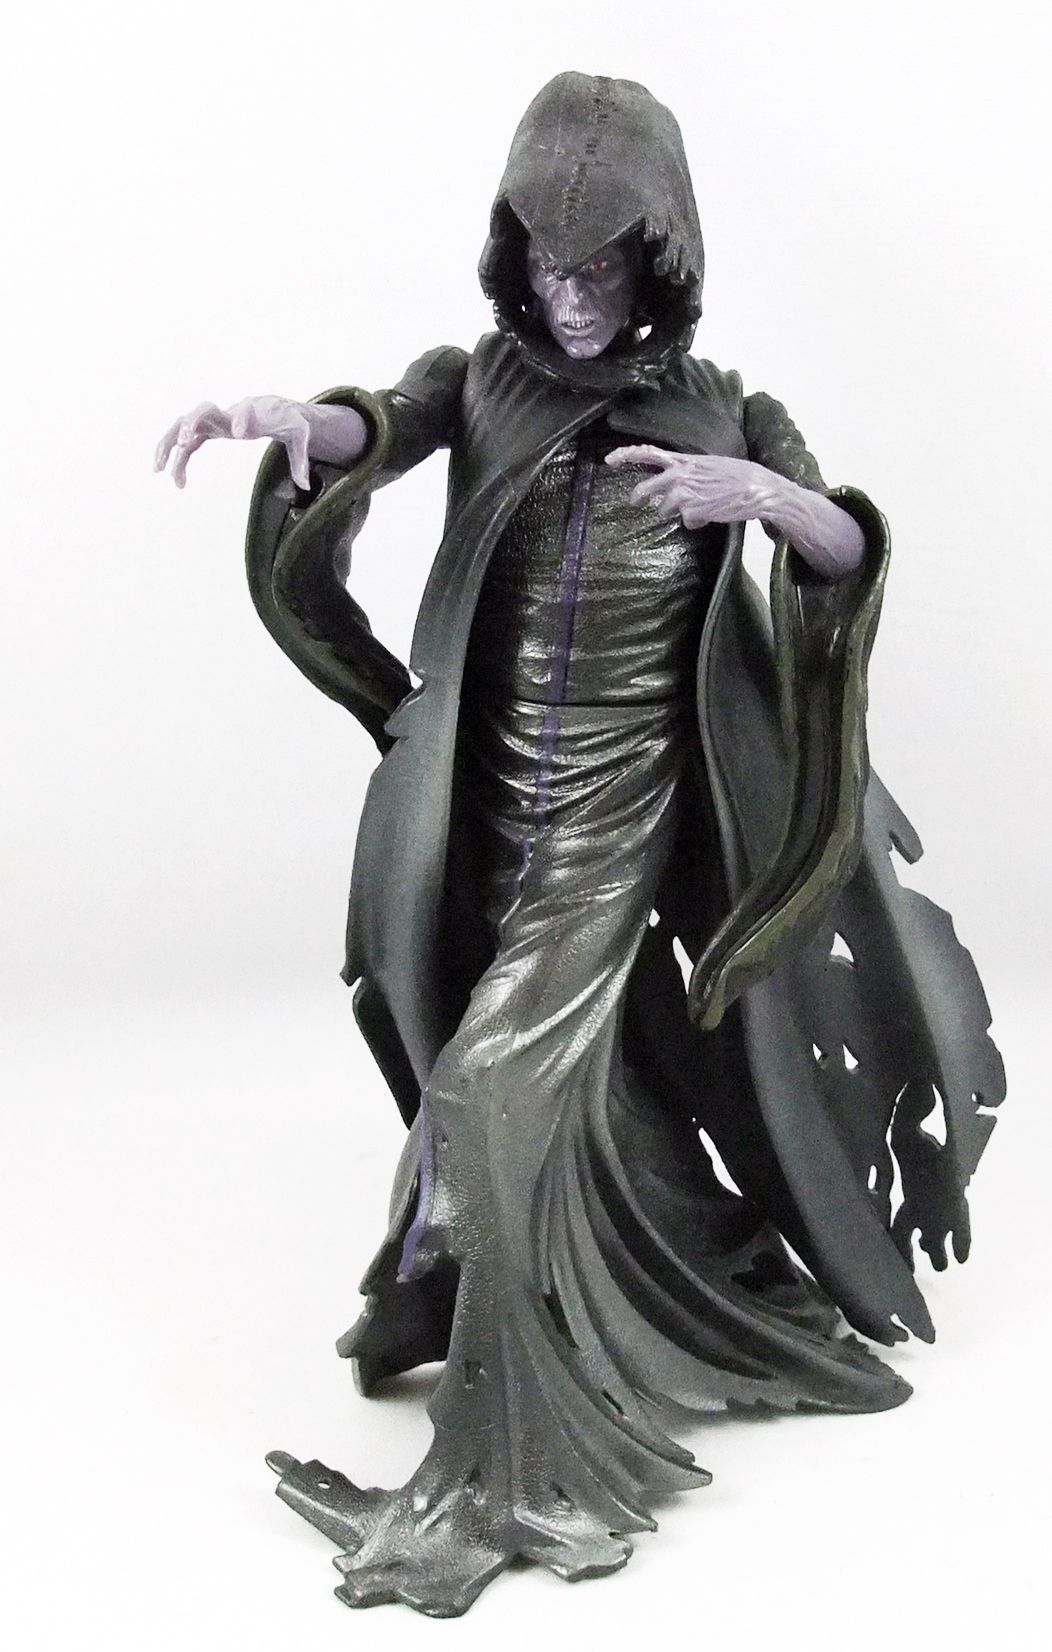 Harry Potter - Mattel - Figurine articulée 20cm Harry Potter